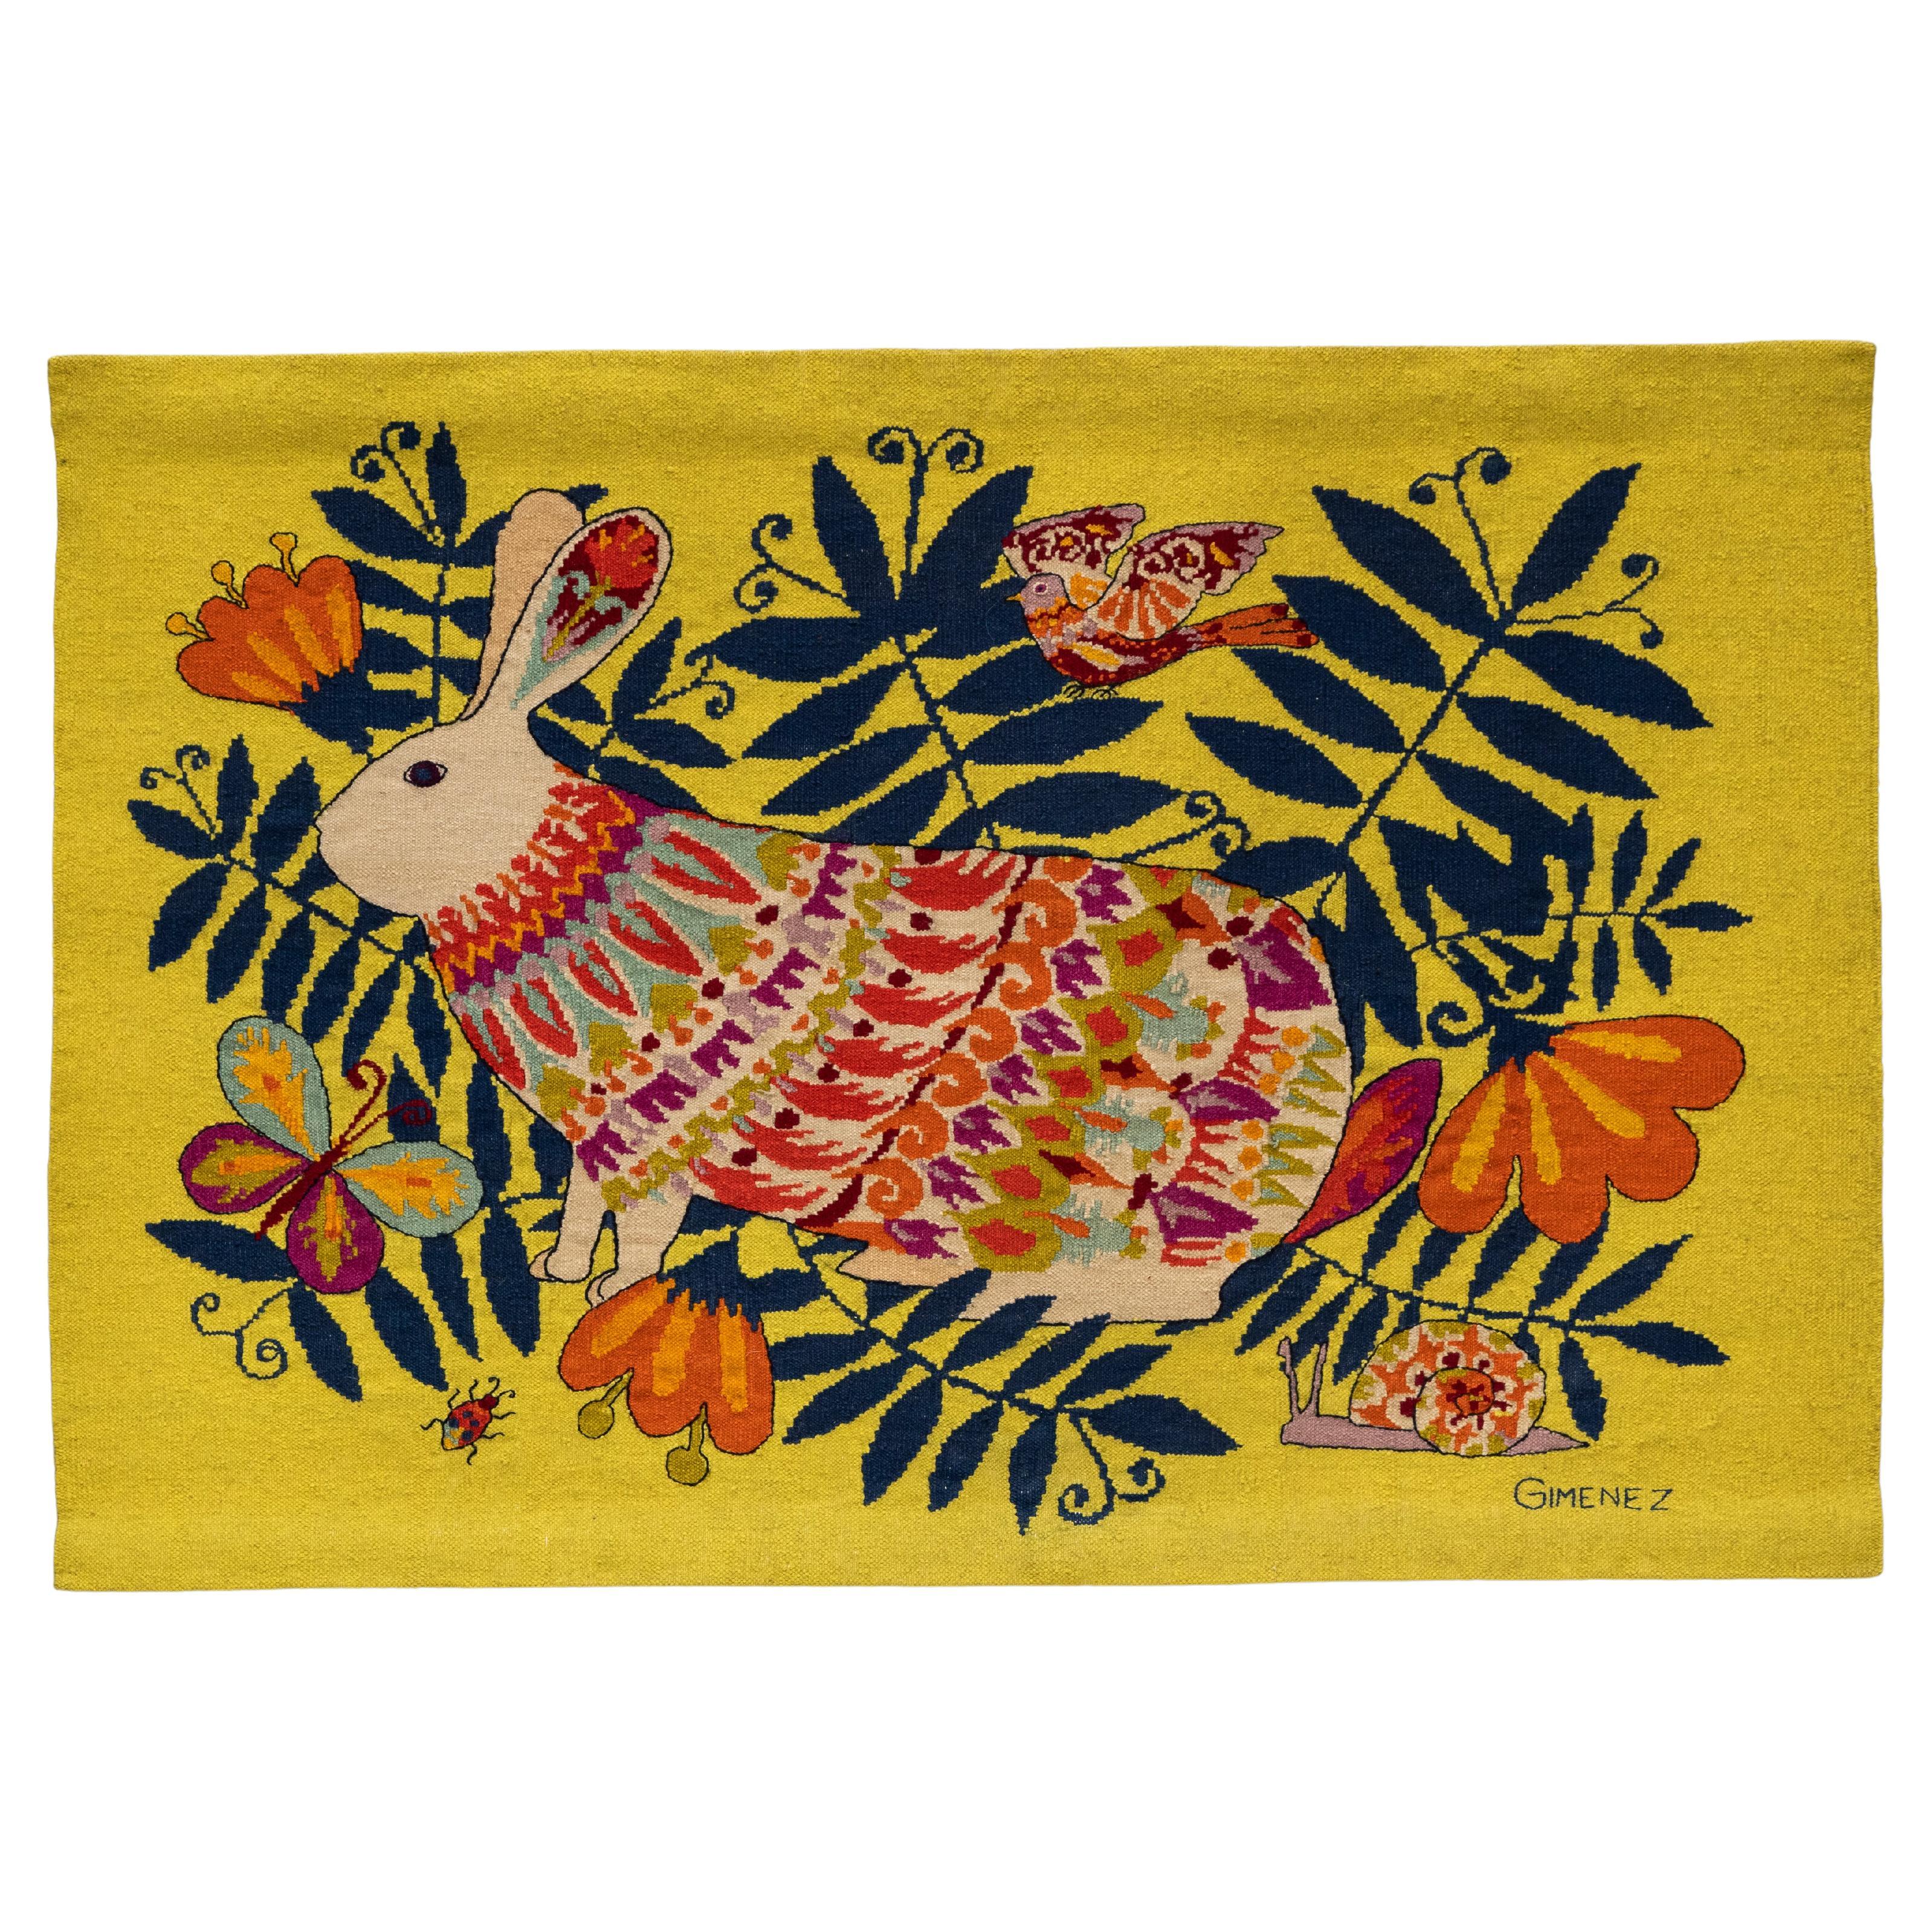 Tapestry by Edgardo Giménez,  "Conejo", Argentina, 1967. For Sale